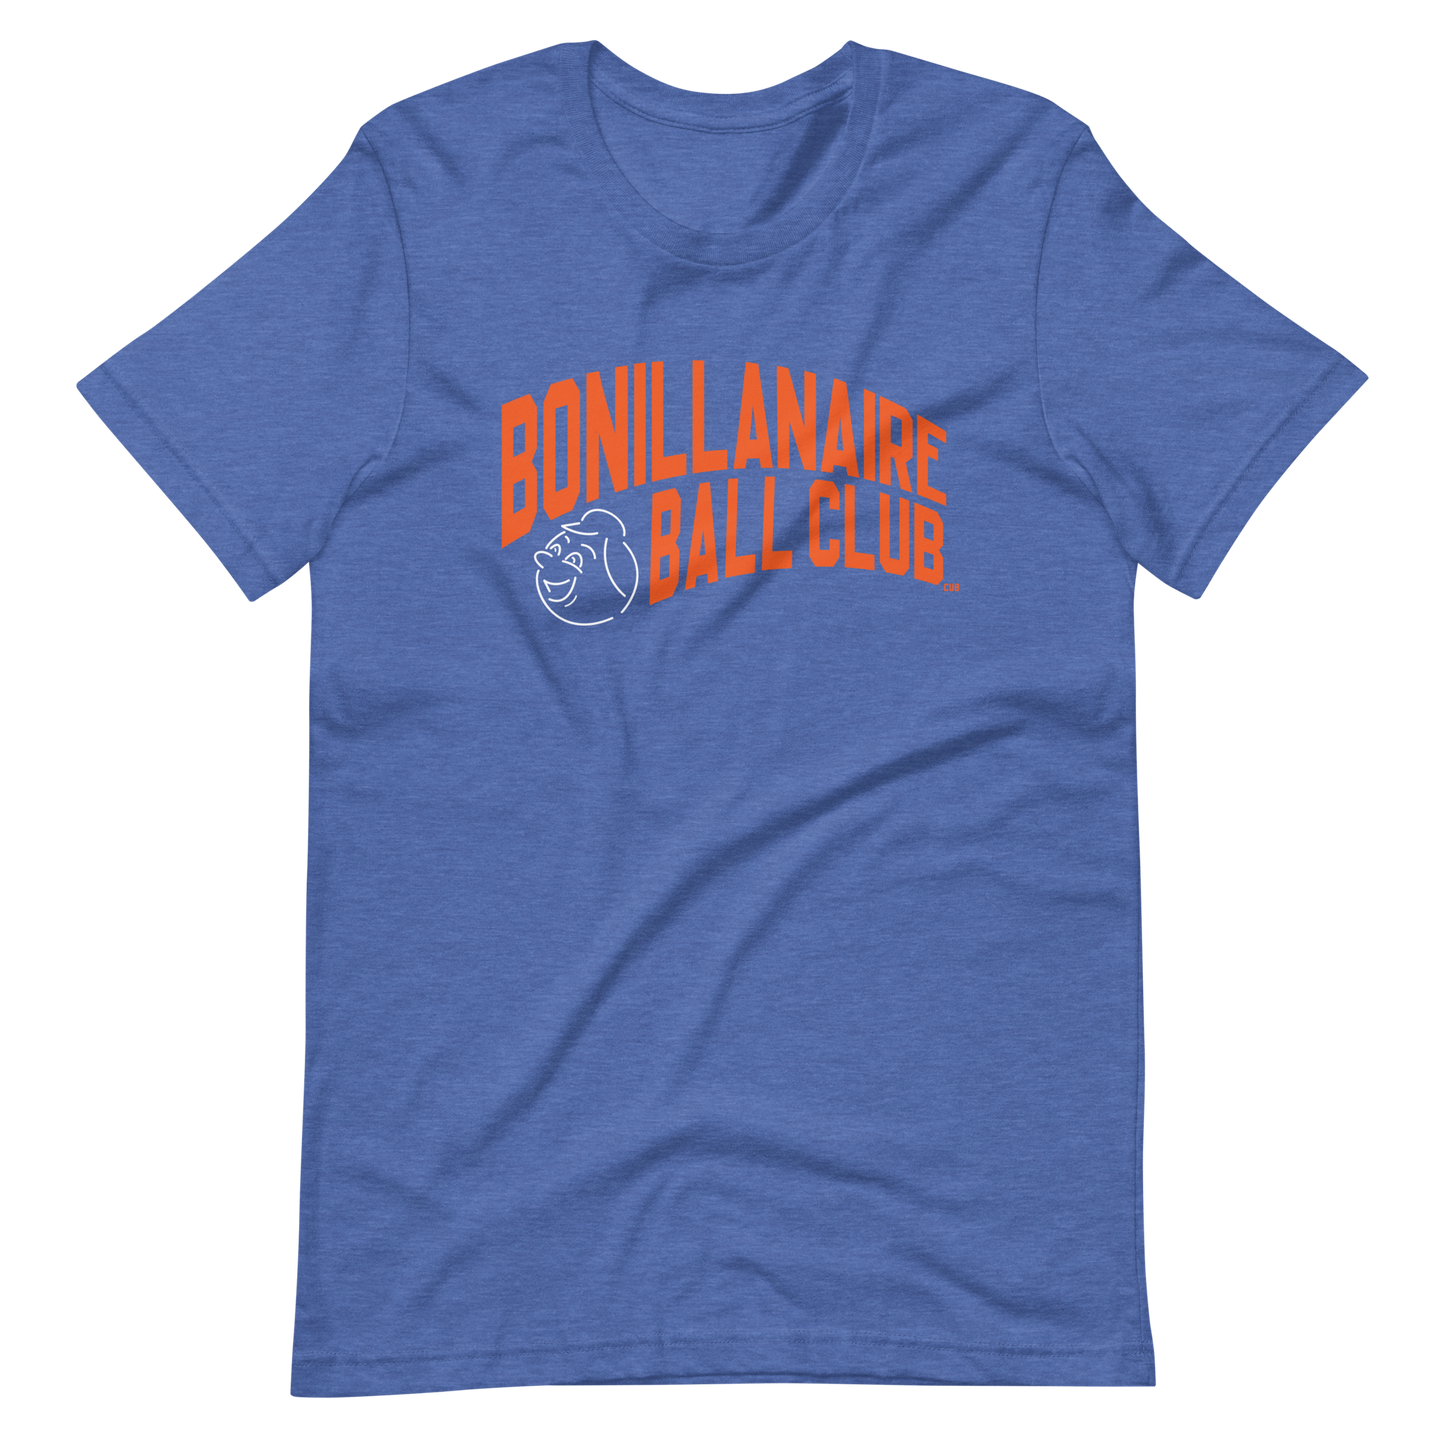 Bonillanaire Ball Club t-shirt